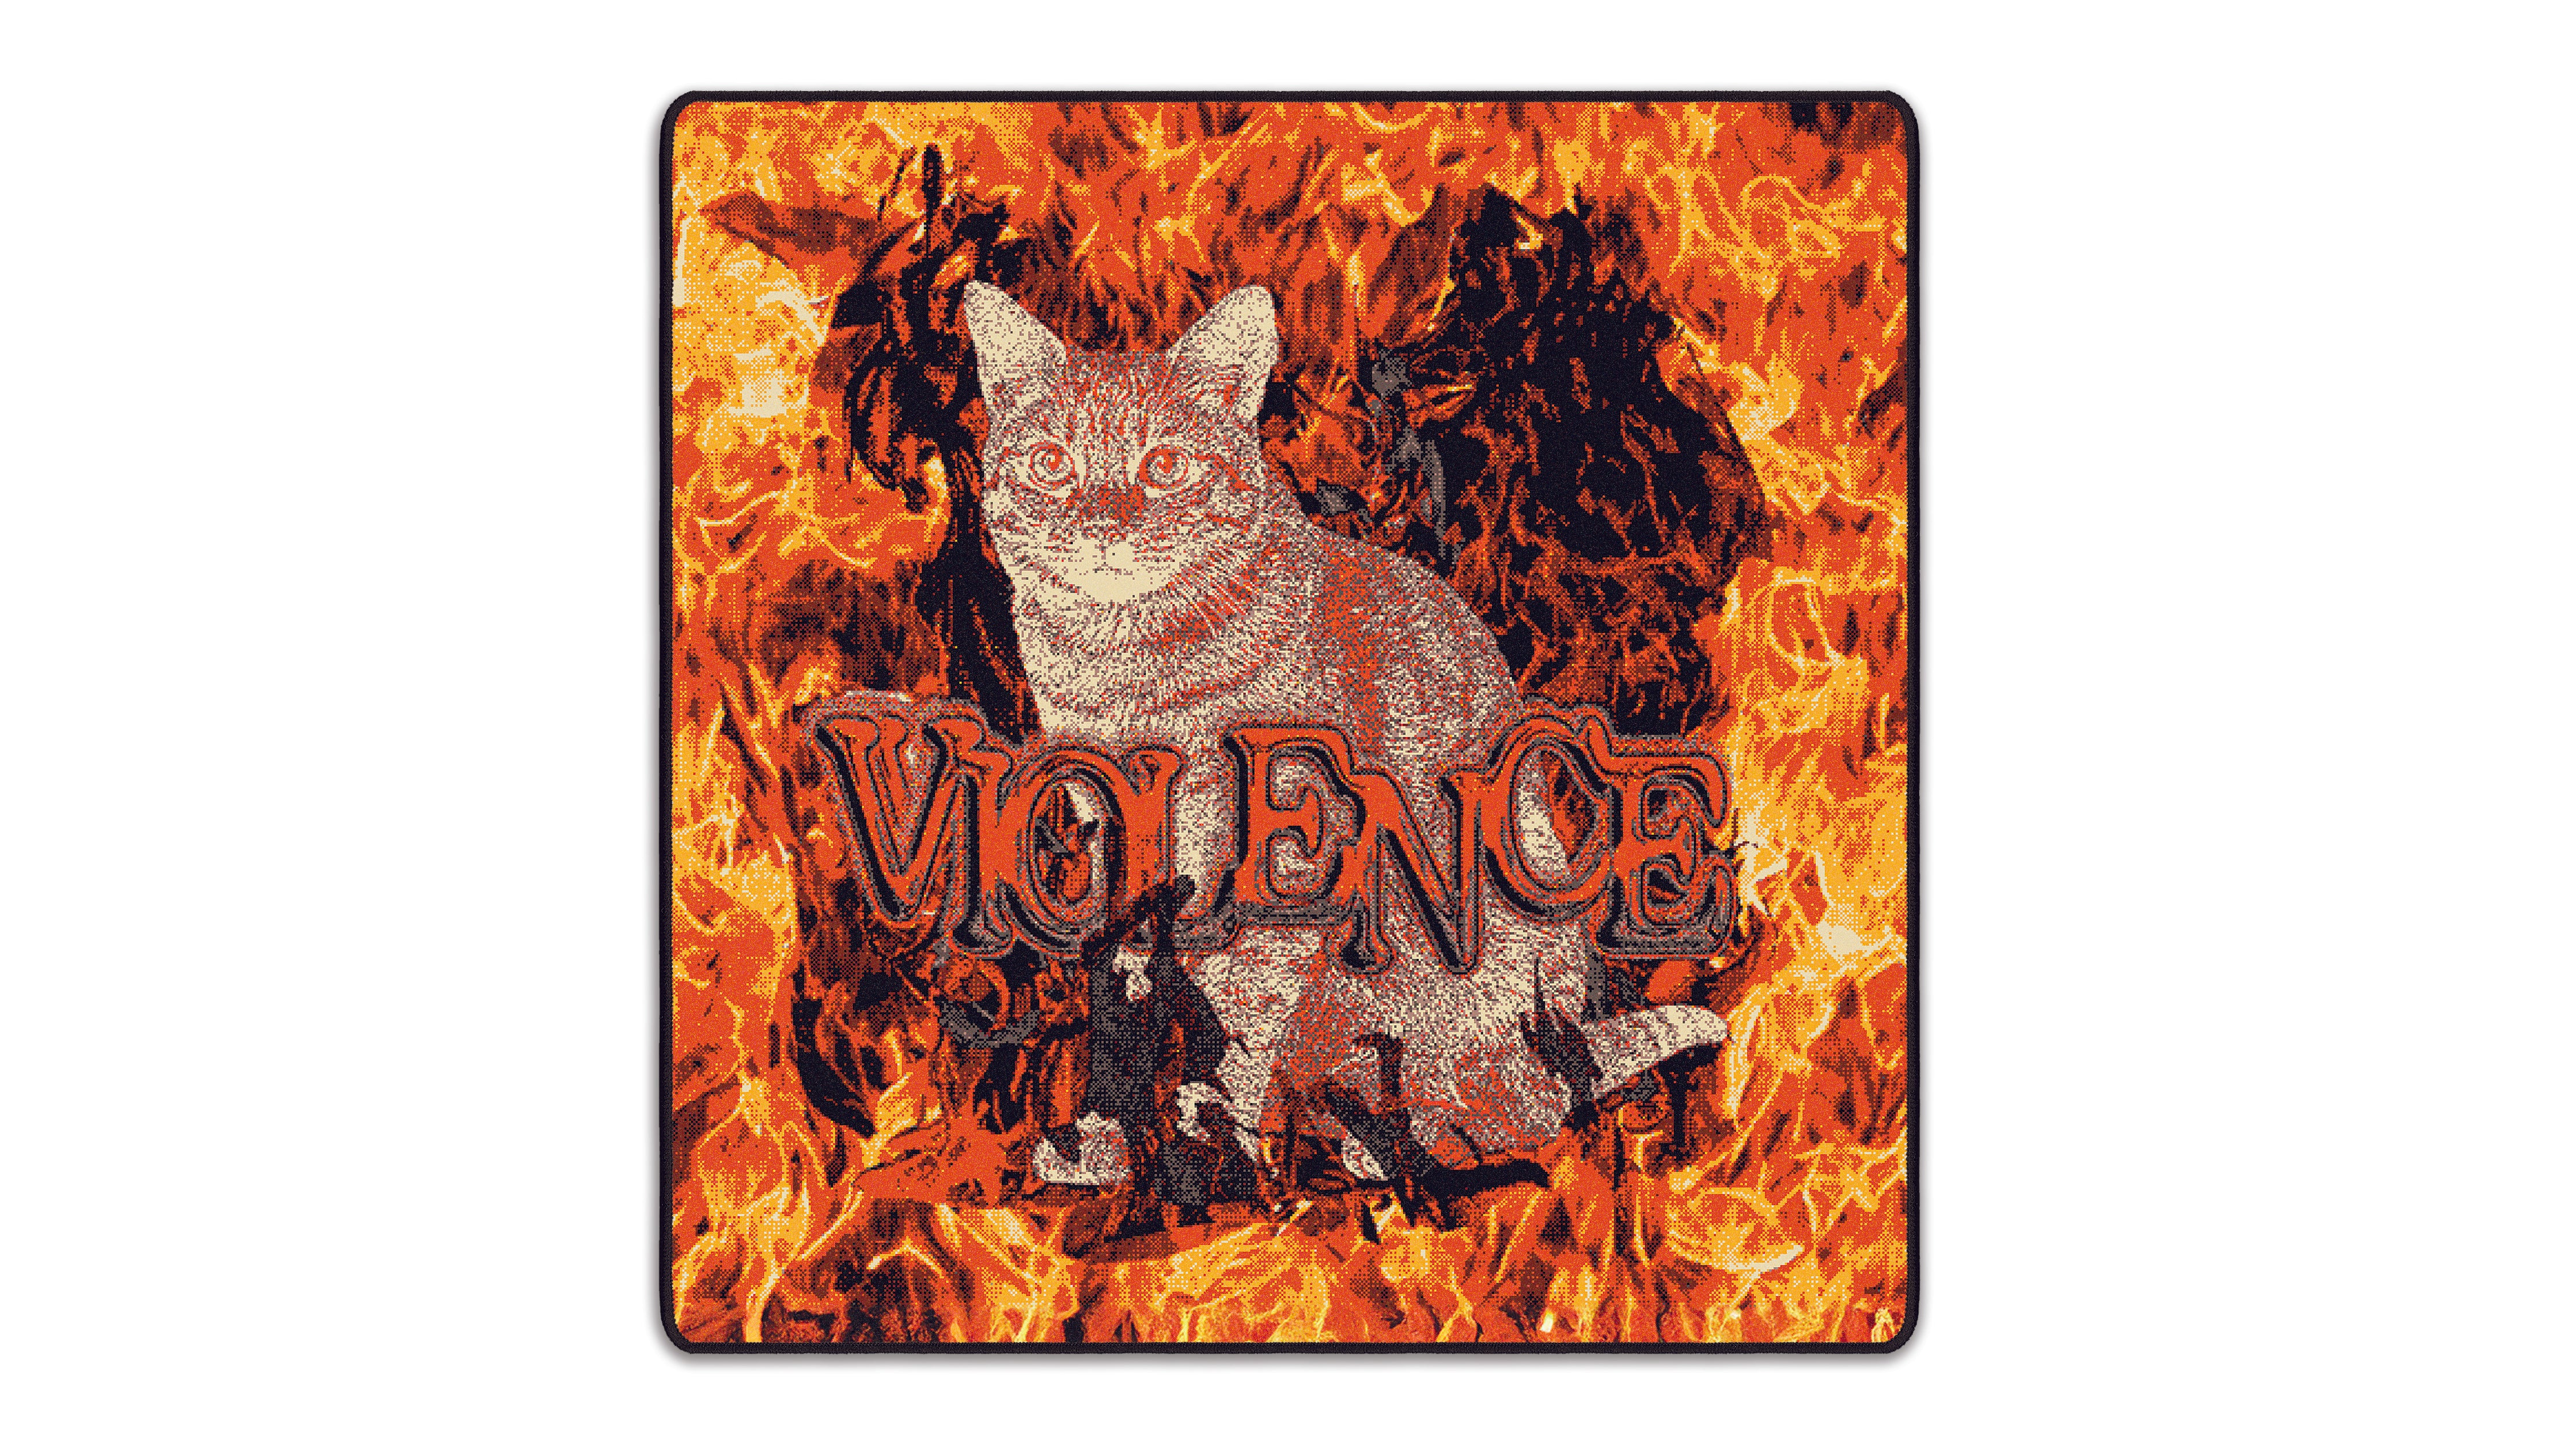 Violence, by Dogecore - The Mousepad Company